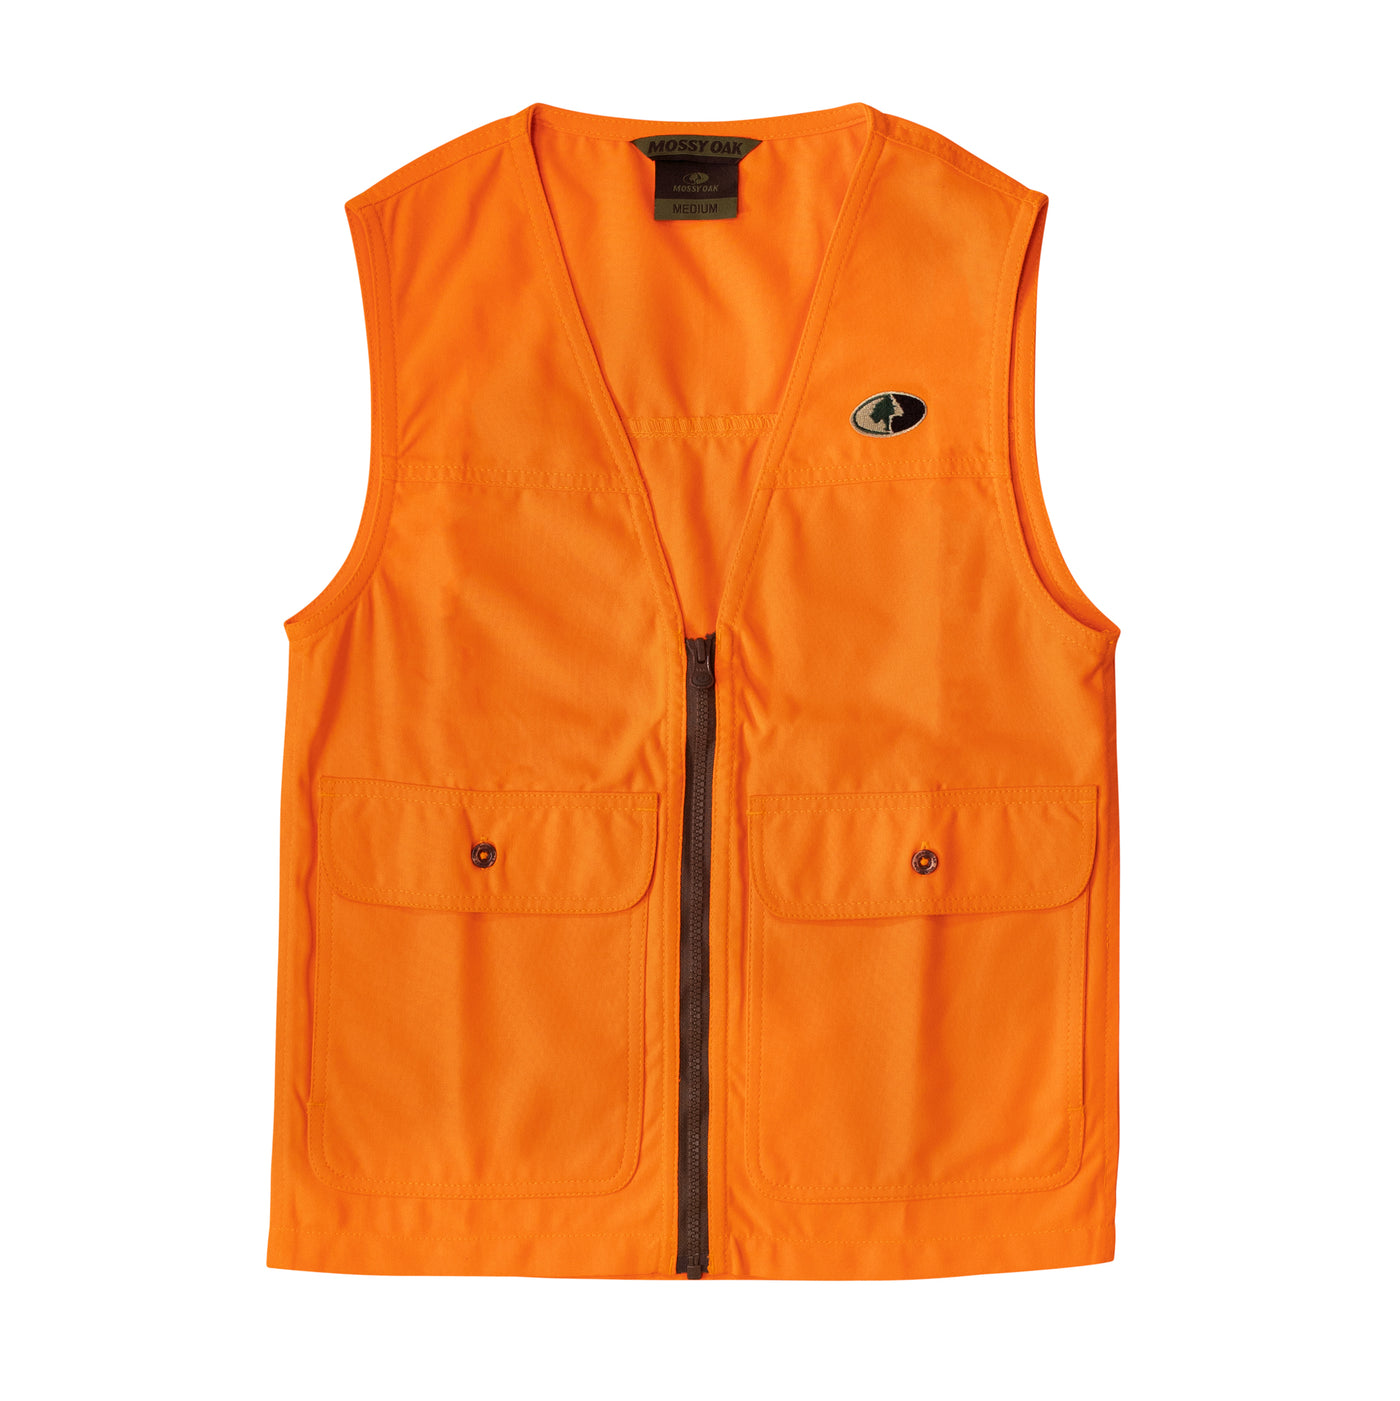 Youth Orange Hunting Vest